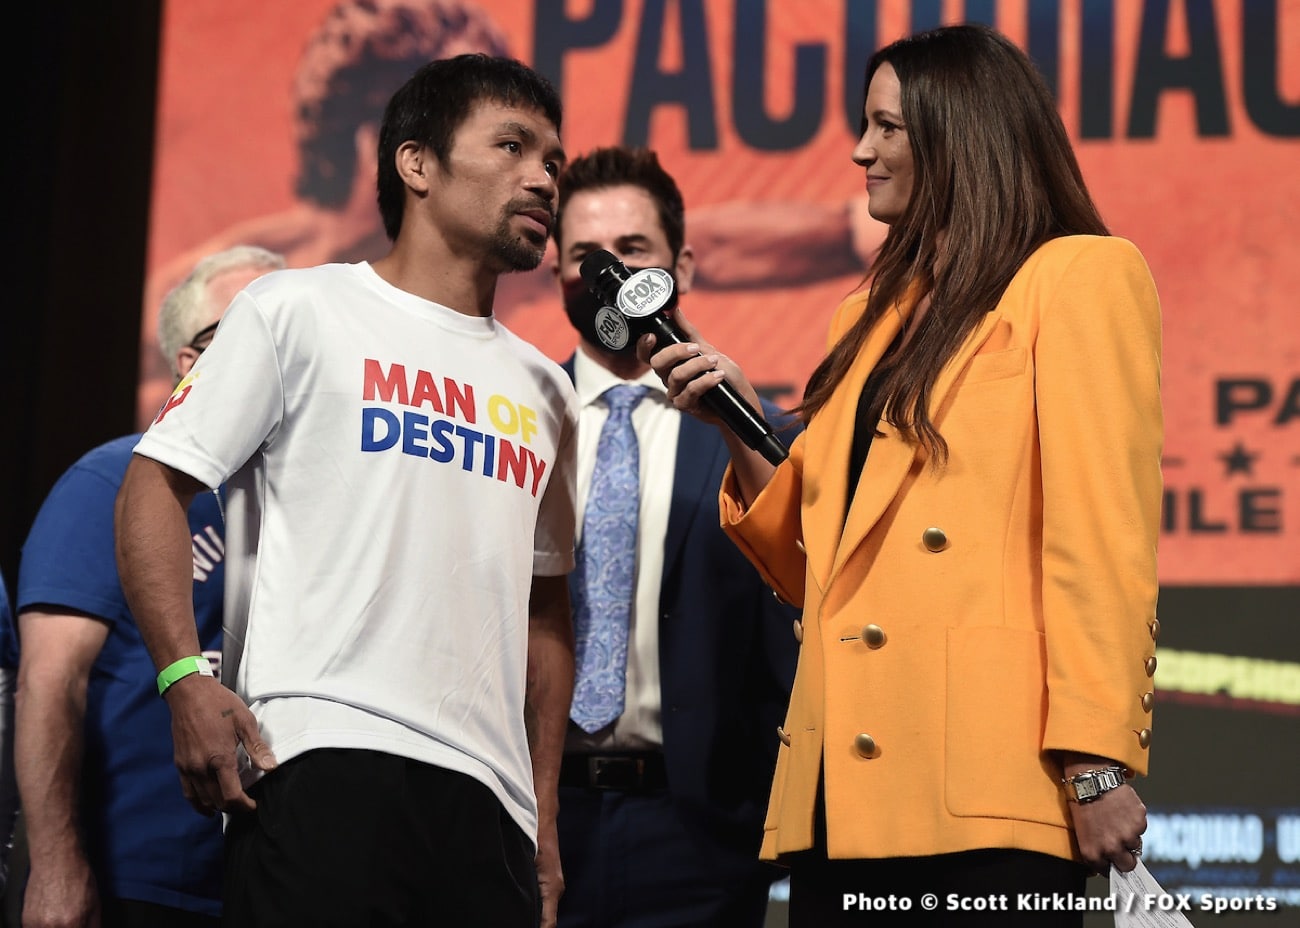 George Kambosos, Manny Pacquiao boxing image / photo